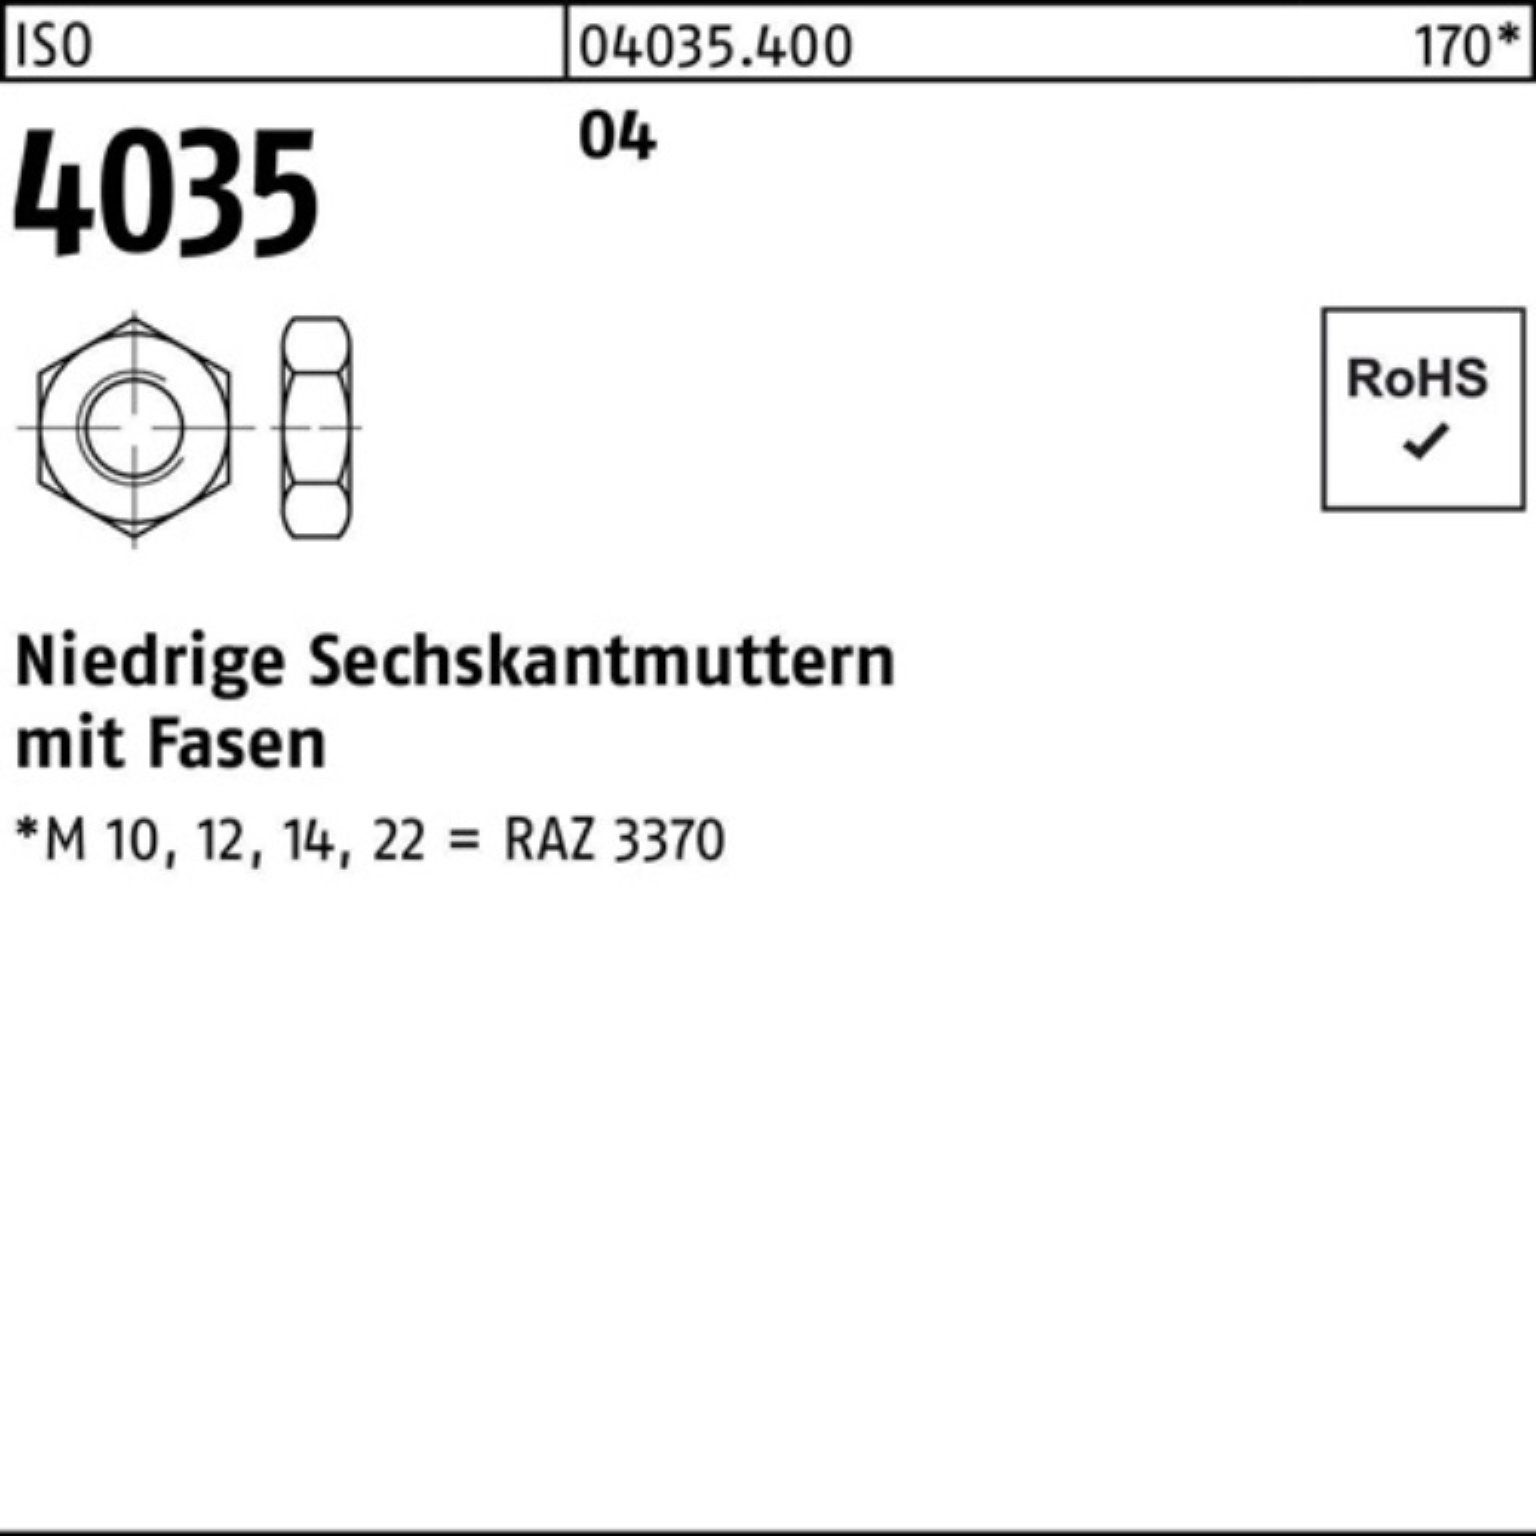 Reyher 1 ISO Muttern Automatenstahl Sechskantmutter niedrig Fasen 4035 100er M12 Pack